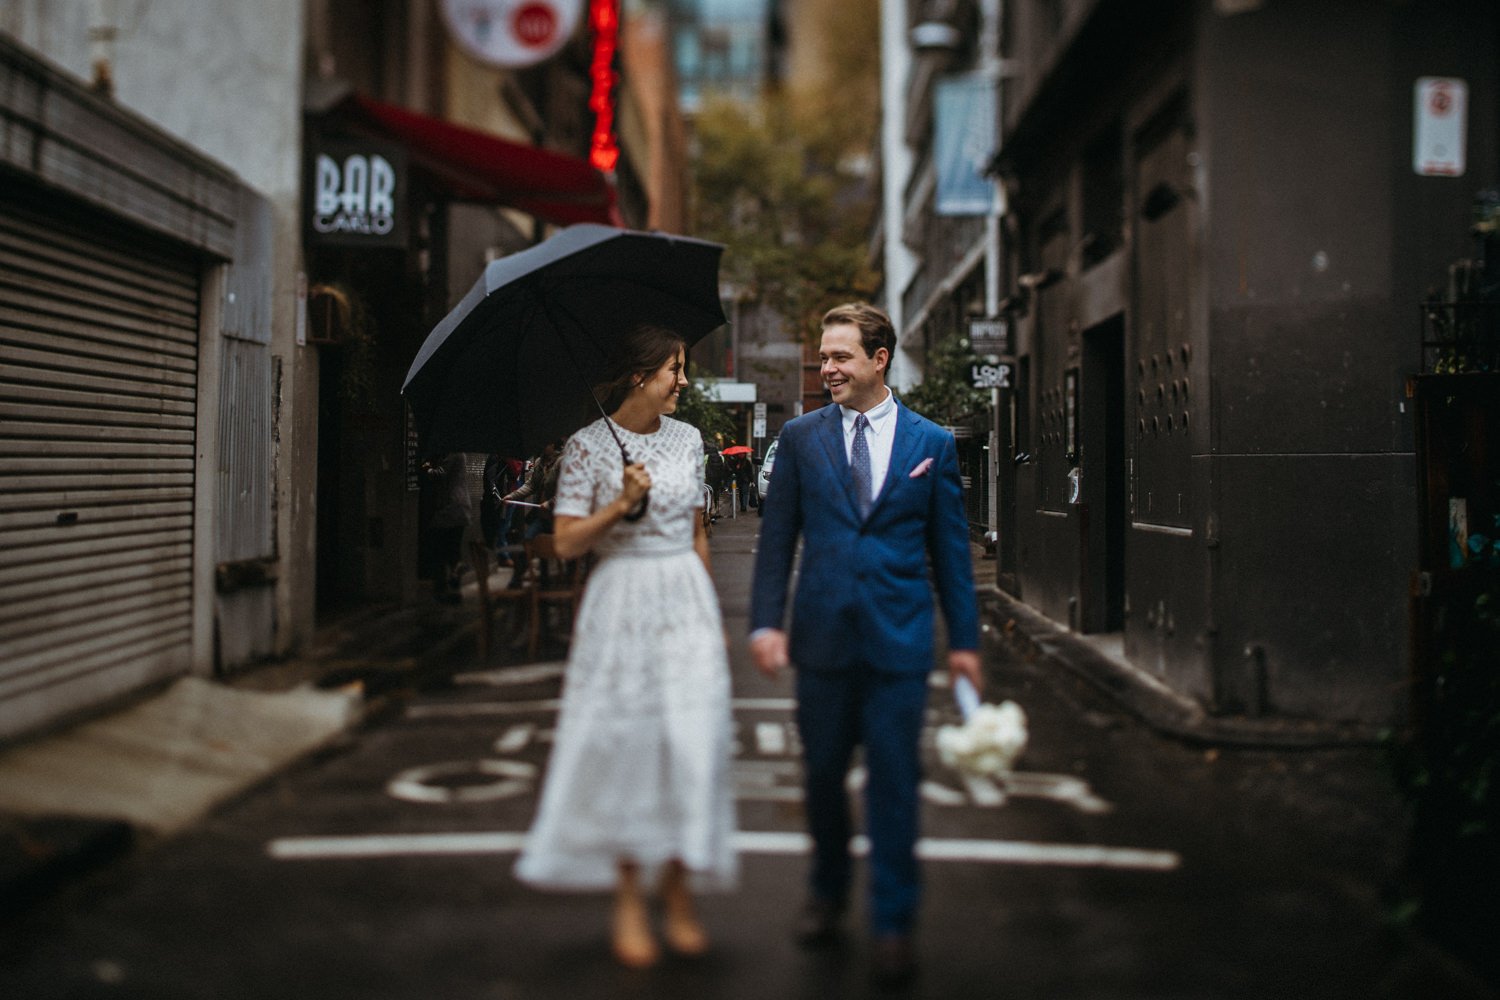 Bride And Groom Standing In Melbourne Alleyway With Umbrella